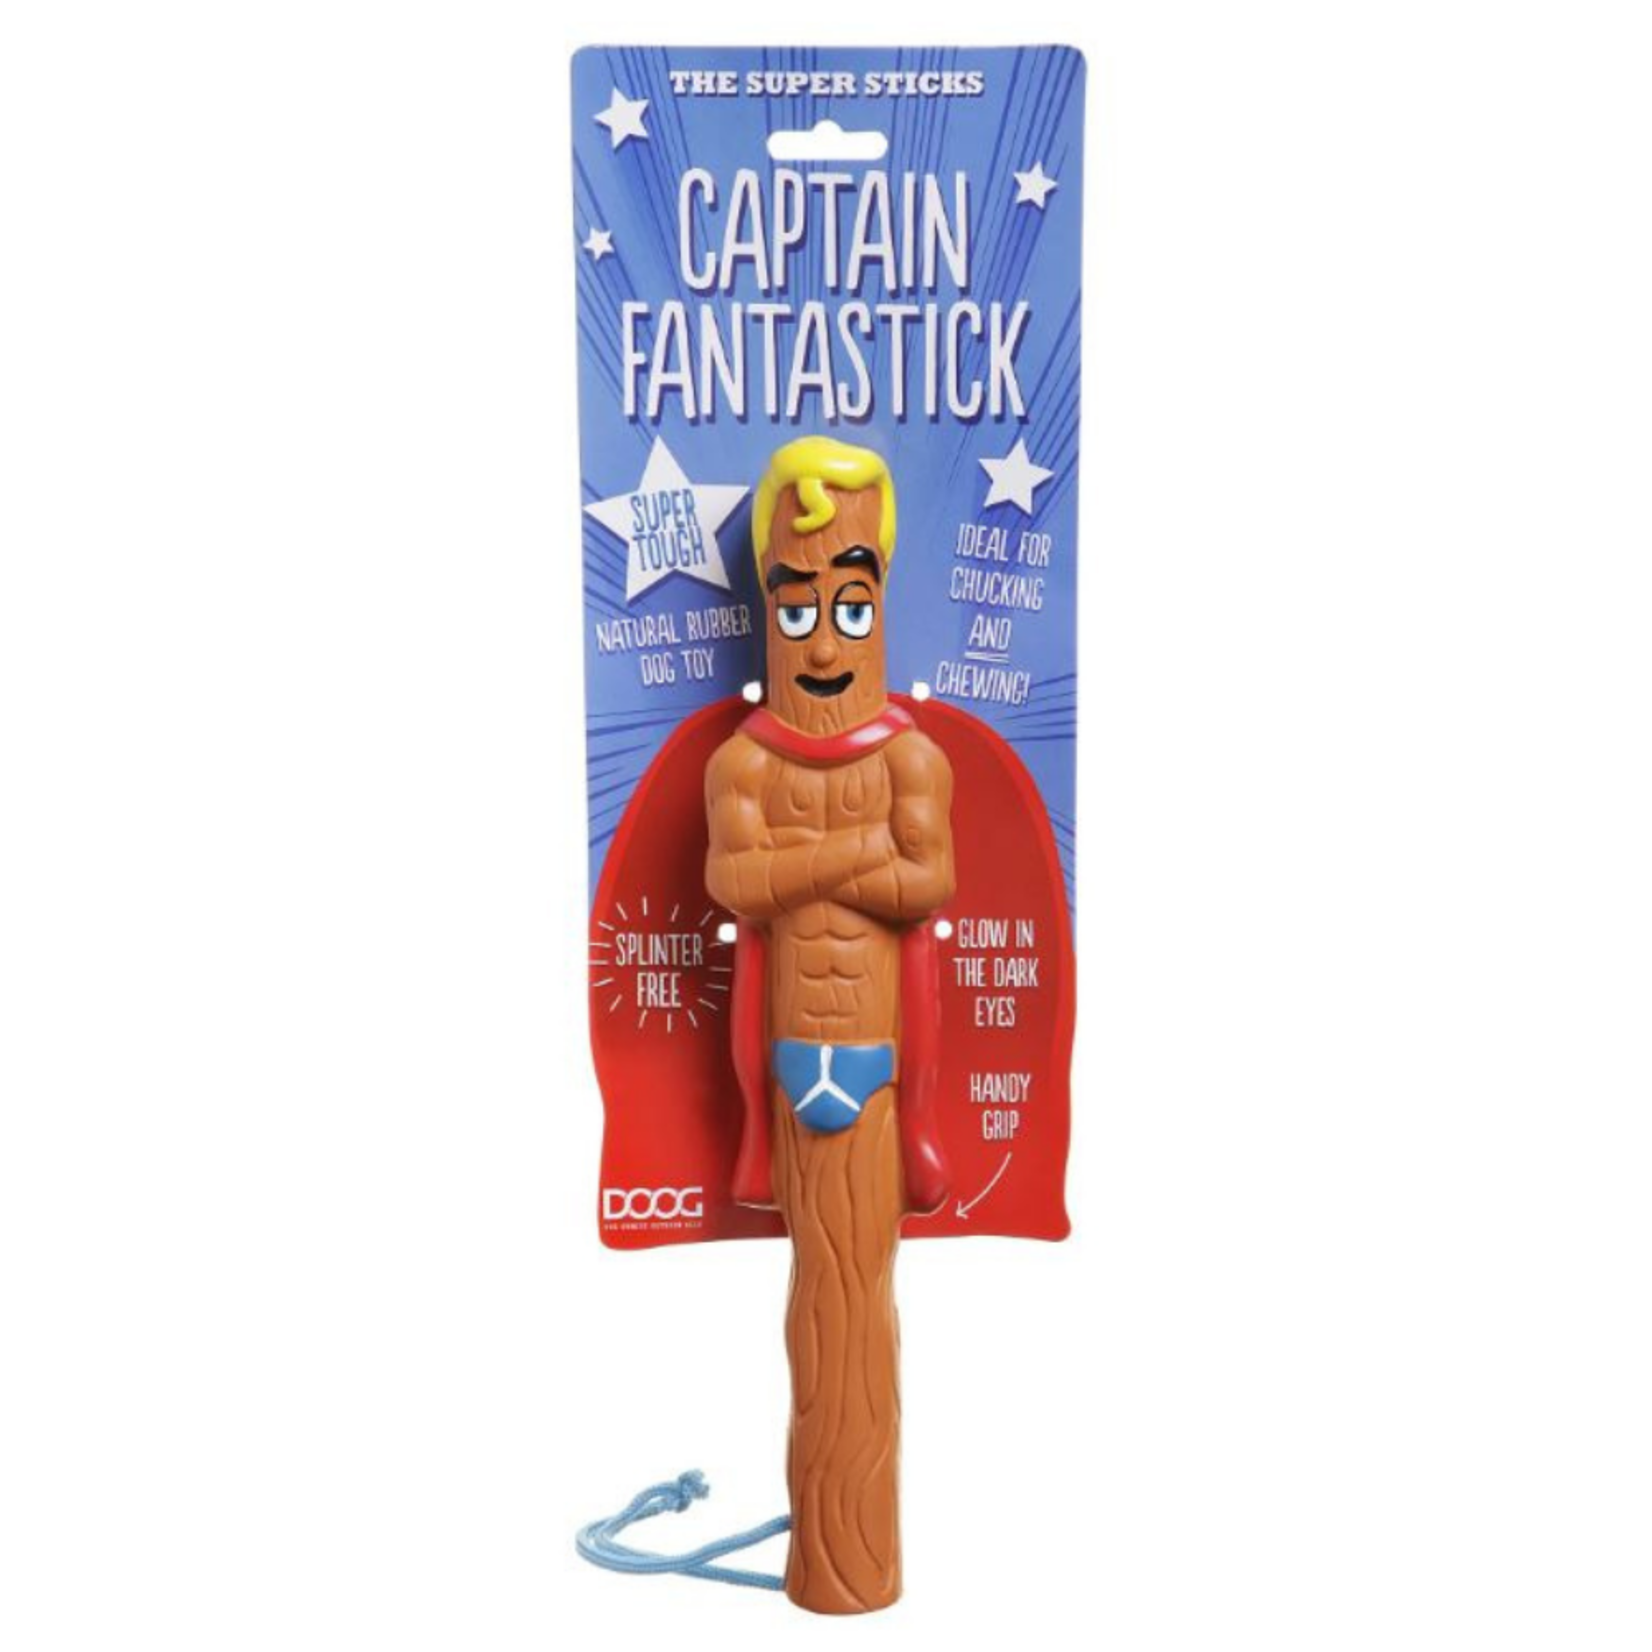 The SUPER STICK Captain Fantastick